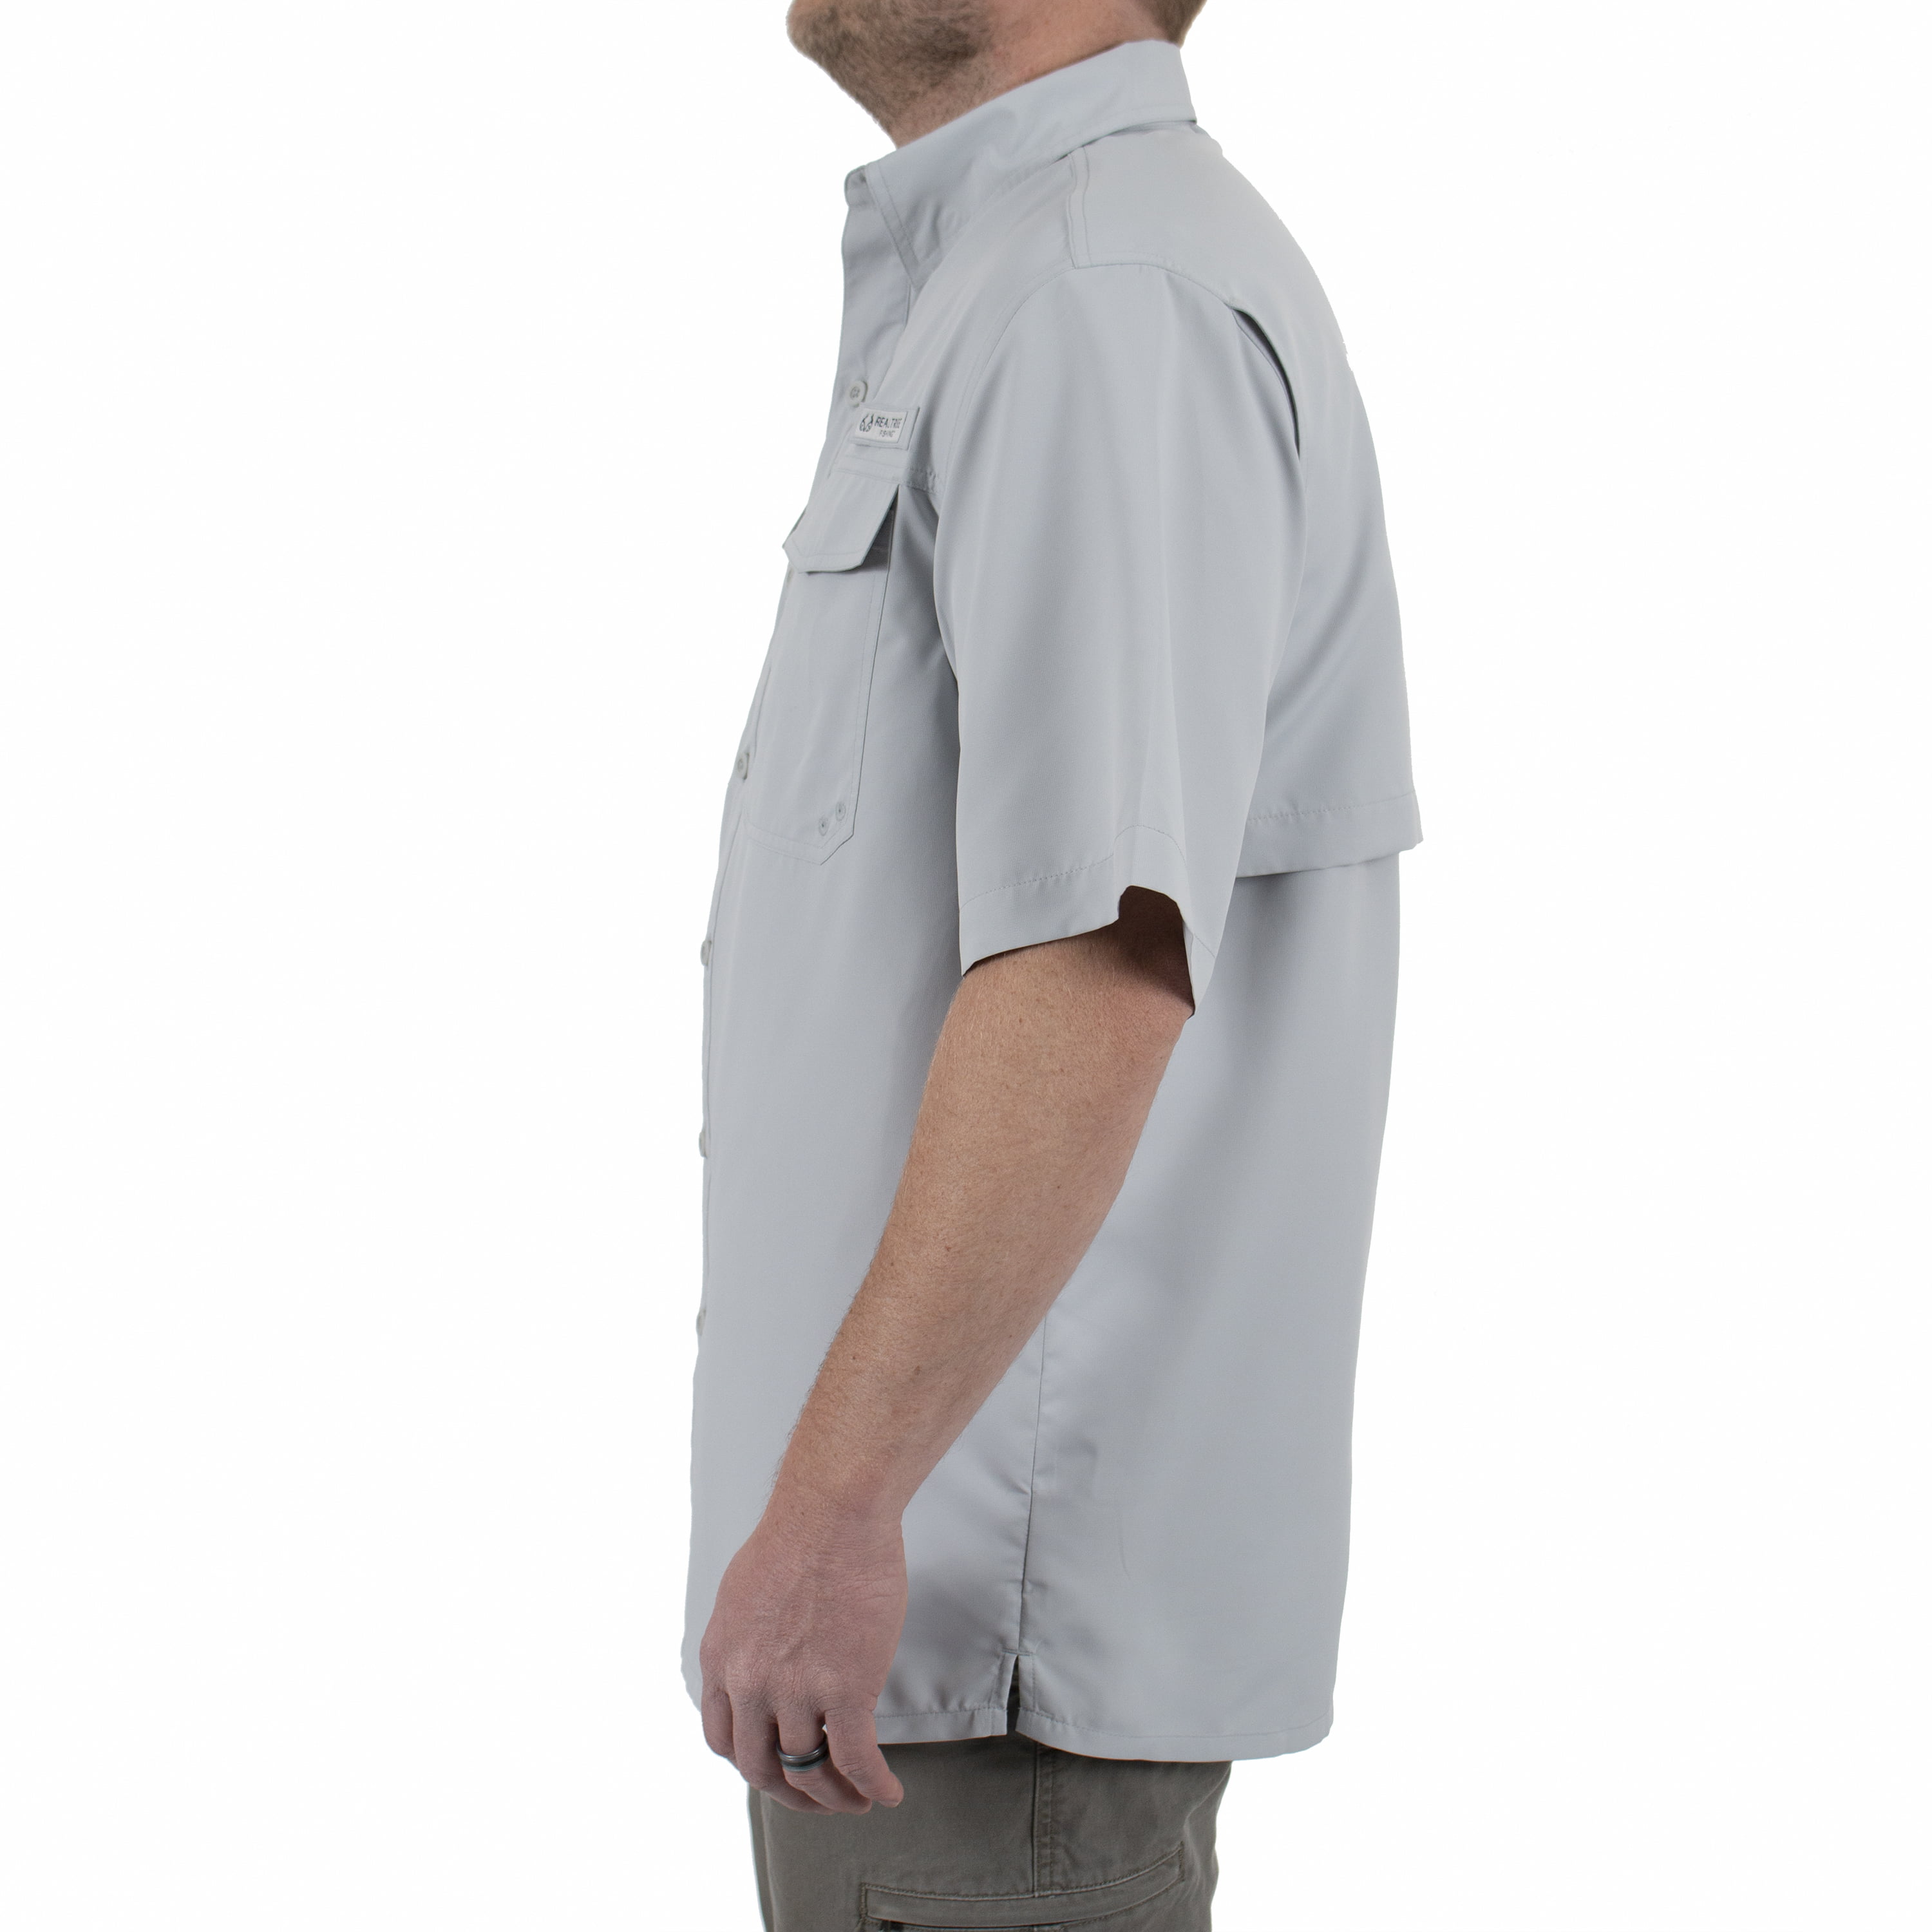 Realtree, Men's Short Sleeve Fishing Guide Shirt, Dusk, Size 3X 